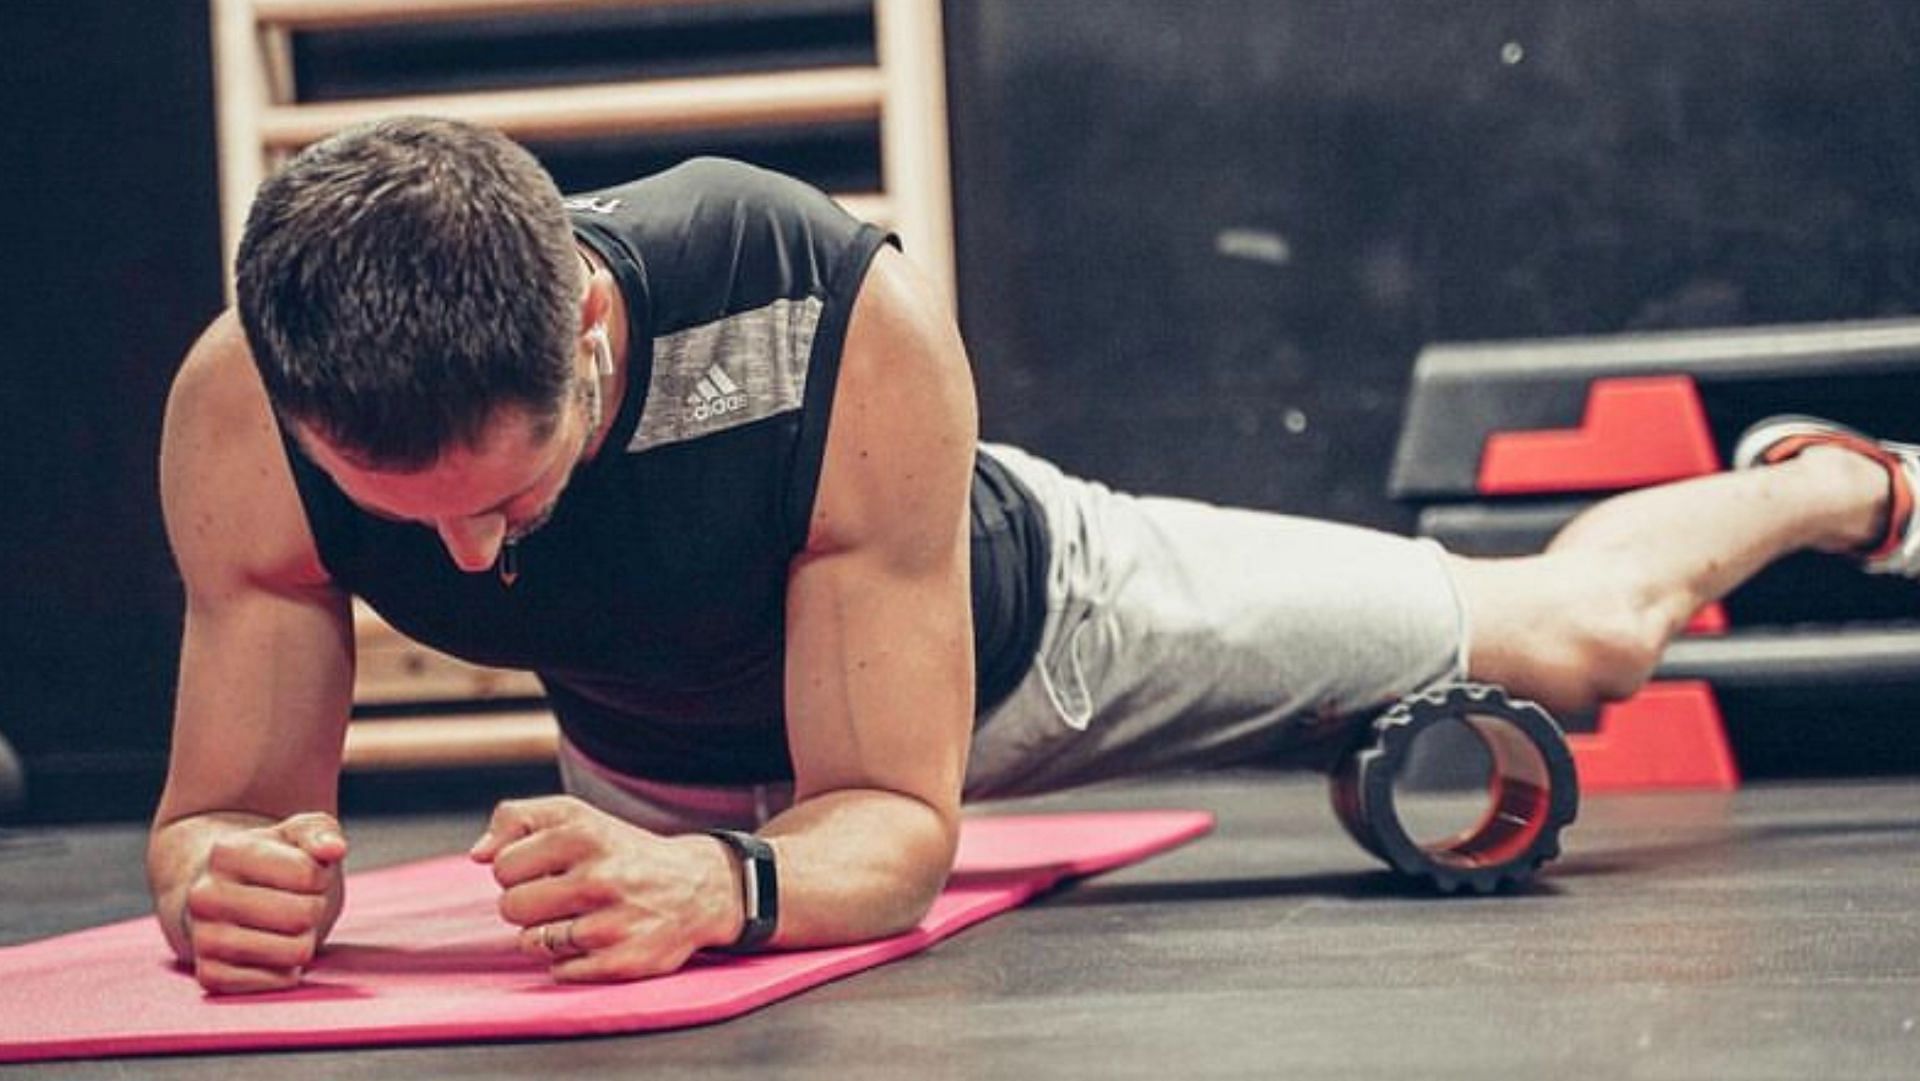 Foam roller exercises for legs offer great benefits. (Photo via Instagram/laurentiu_cical)